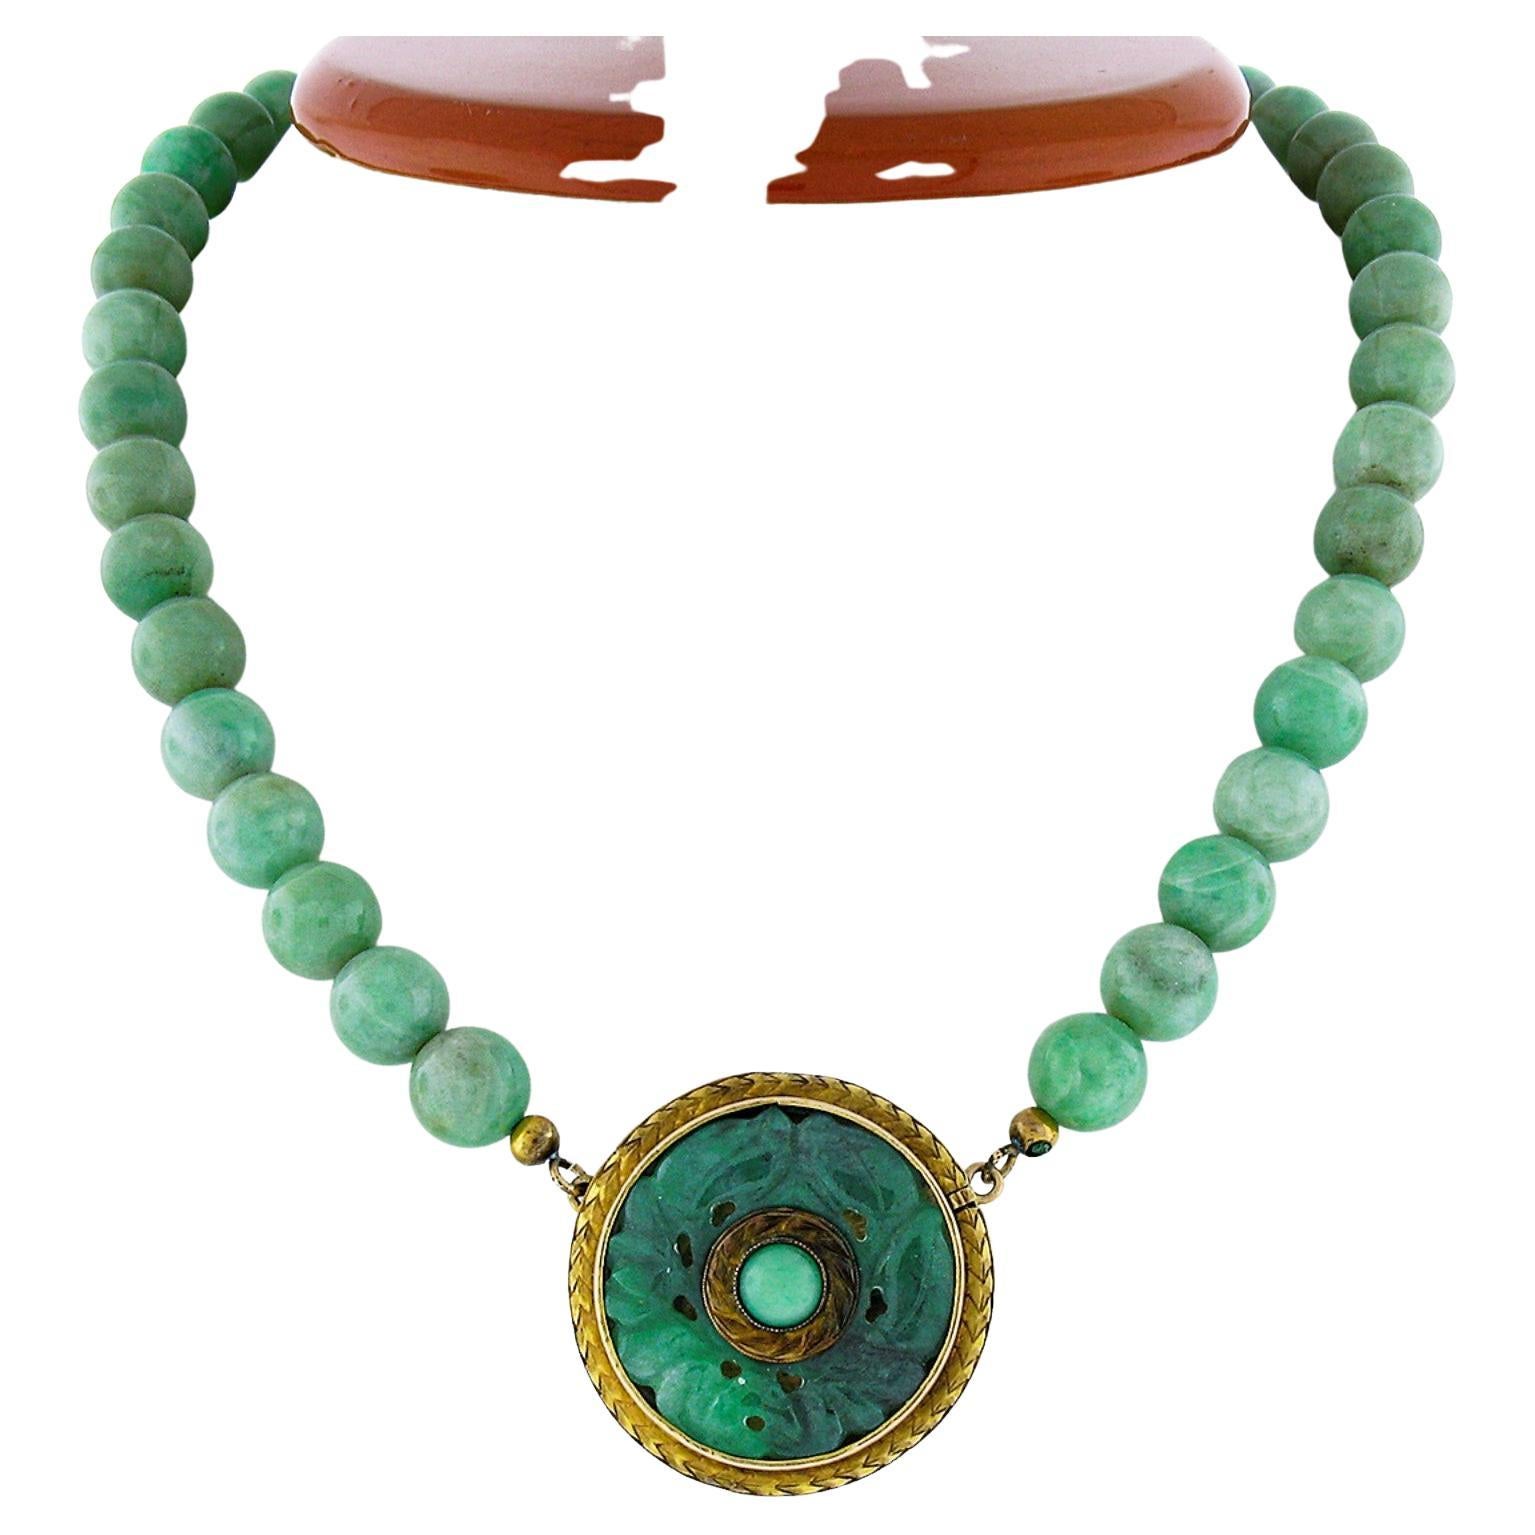 Collier de perles anciennes avec pendentif en or 14 carats gravé en jade vert sculpté